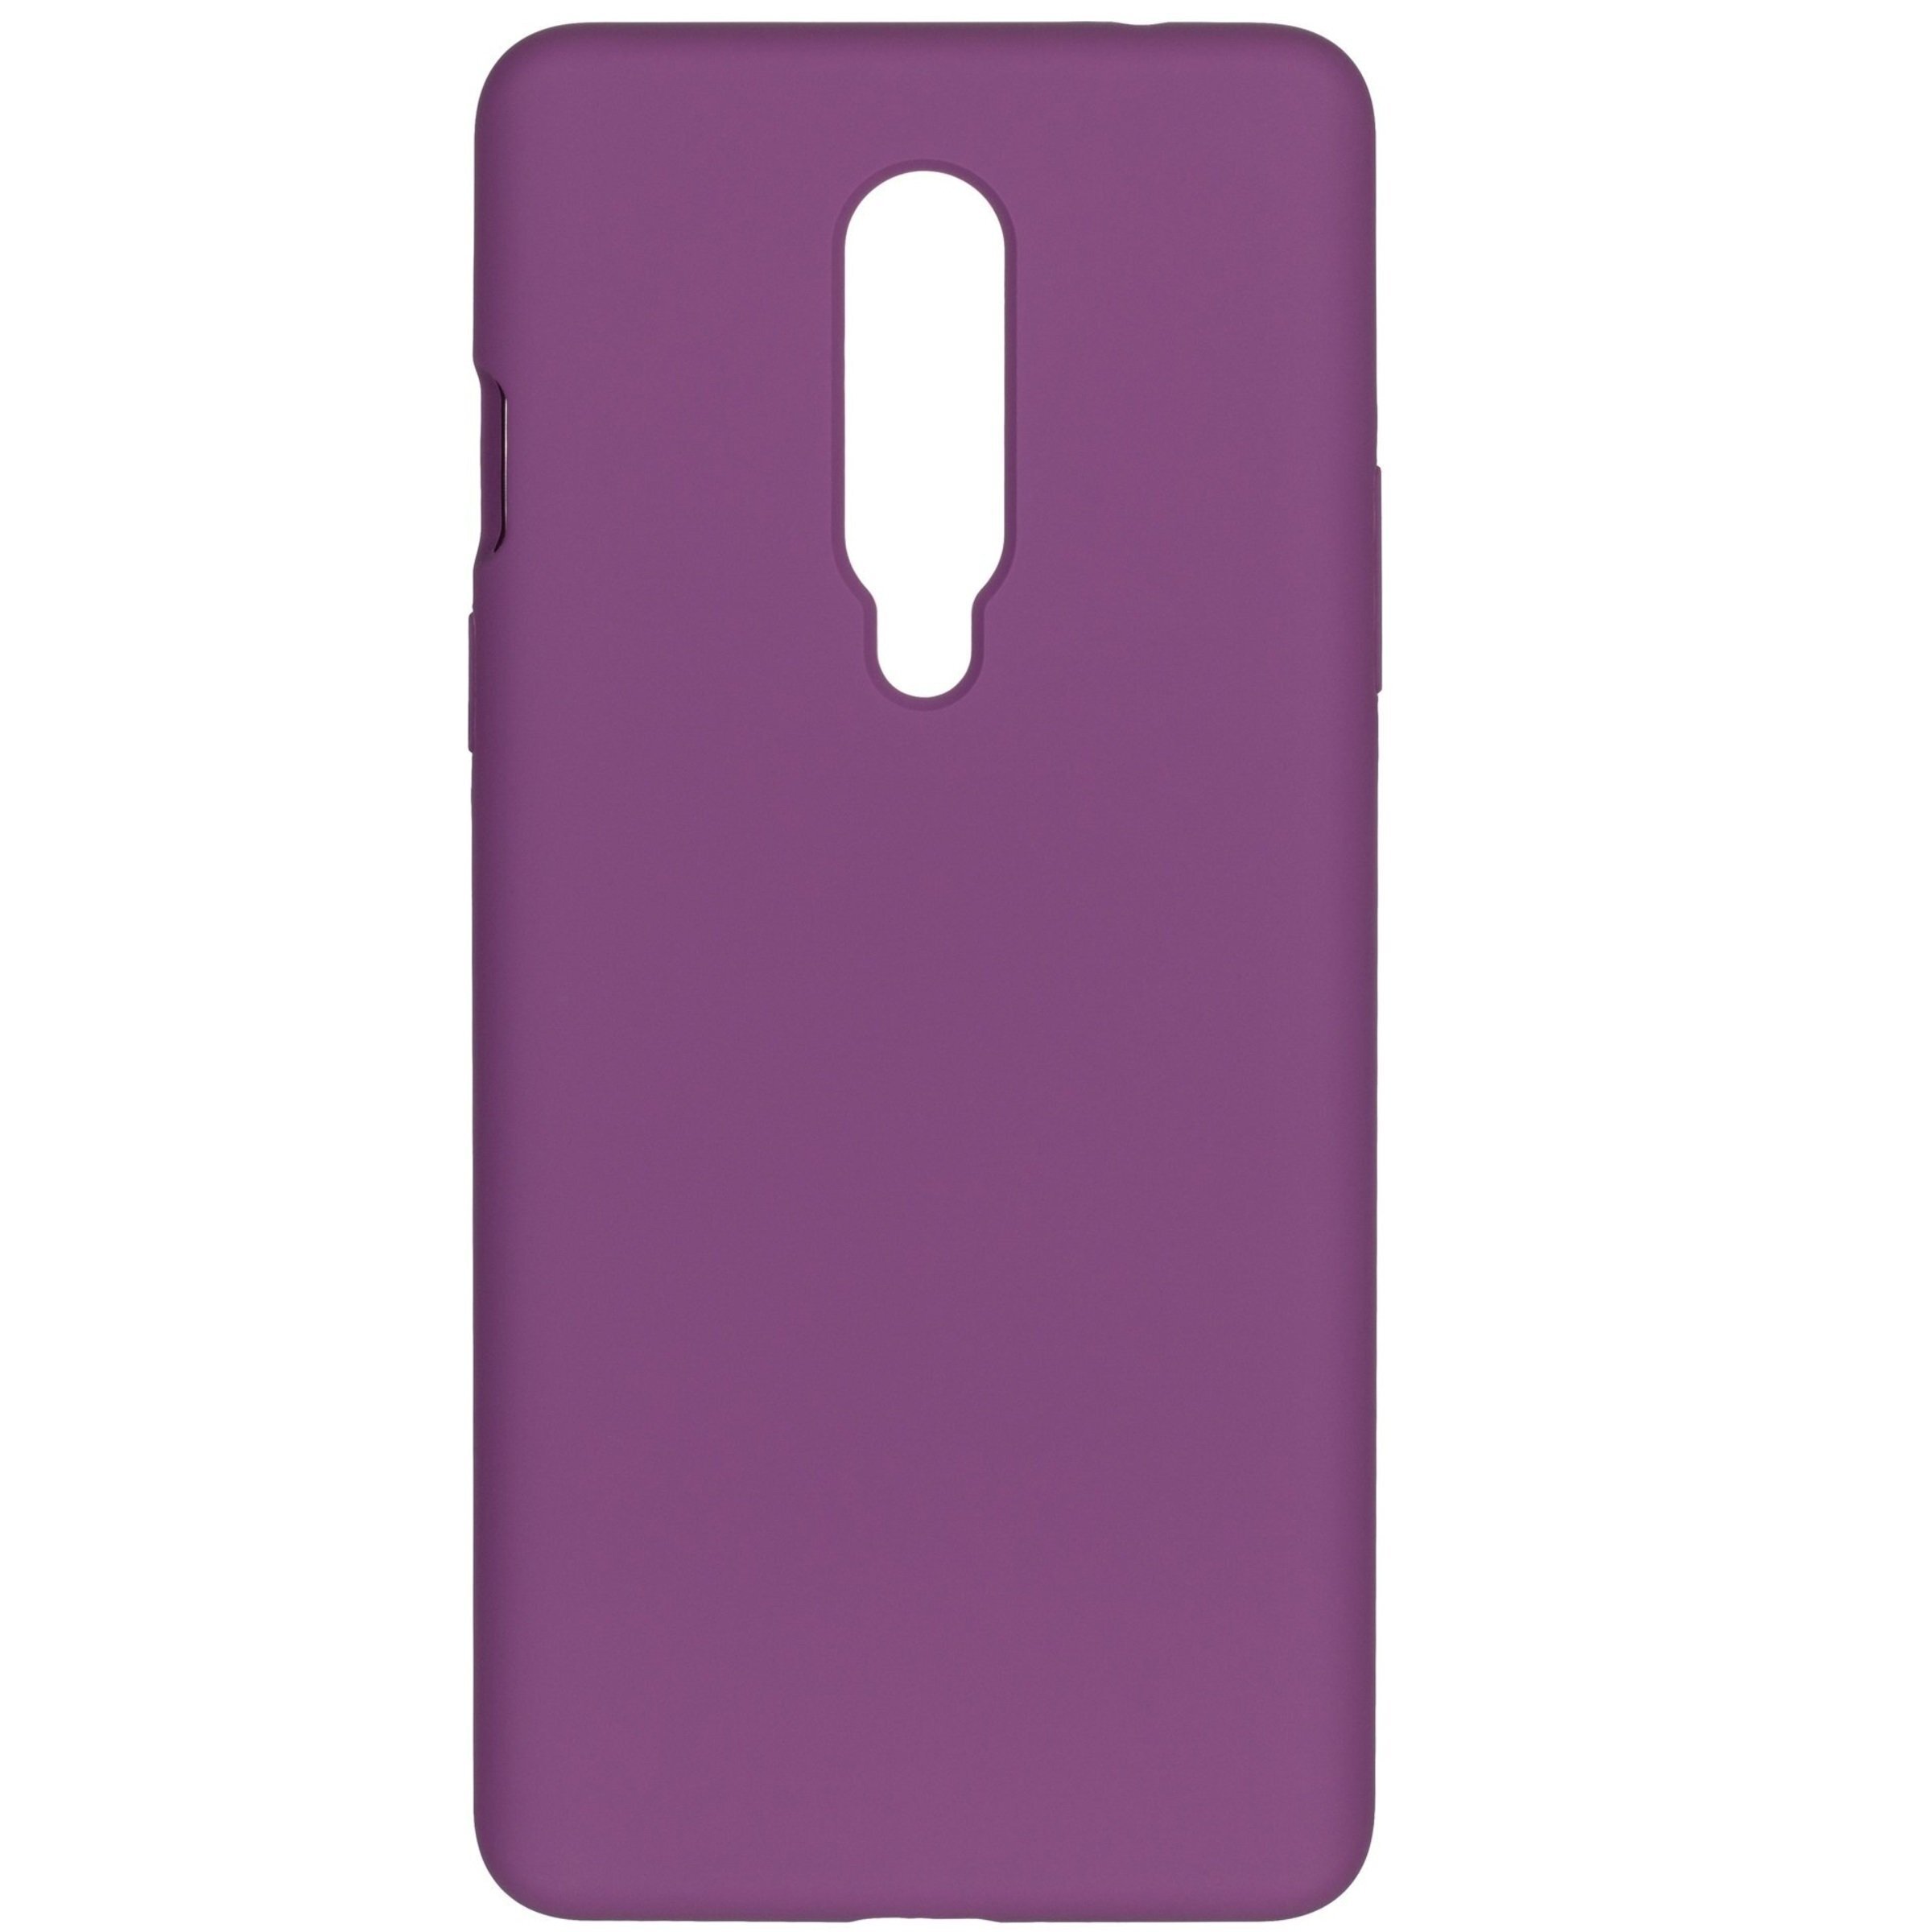 Чехол 2Е для OnePlus 8 IN2013 Solid Silicon Purple (2E-OP-8-OCLS-PR) фото 1